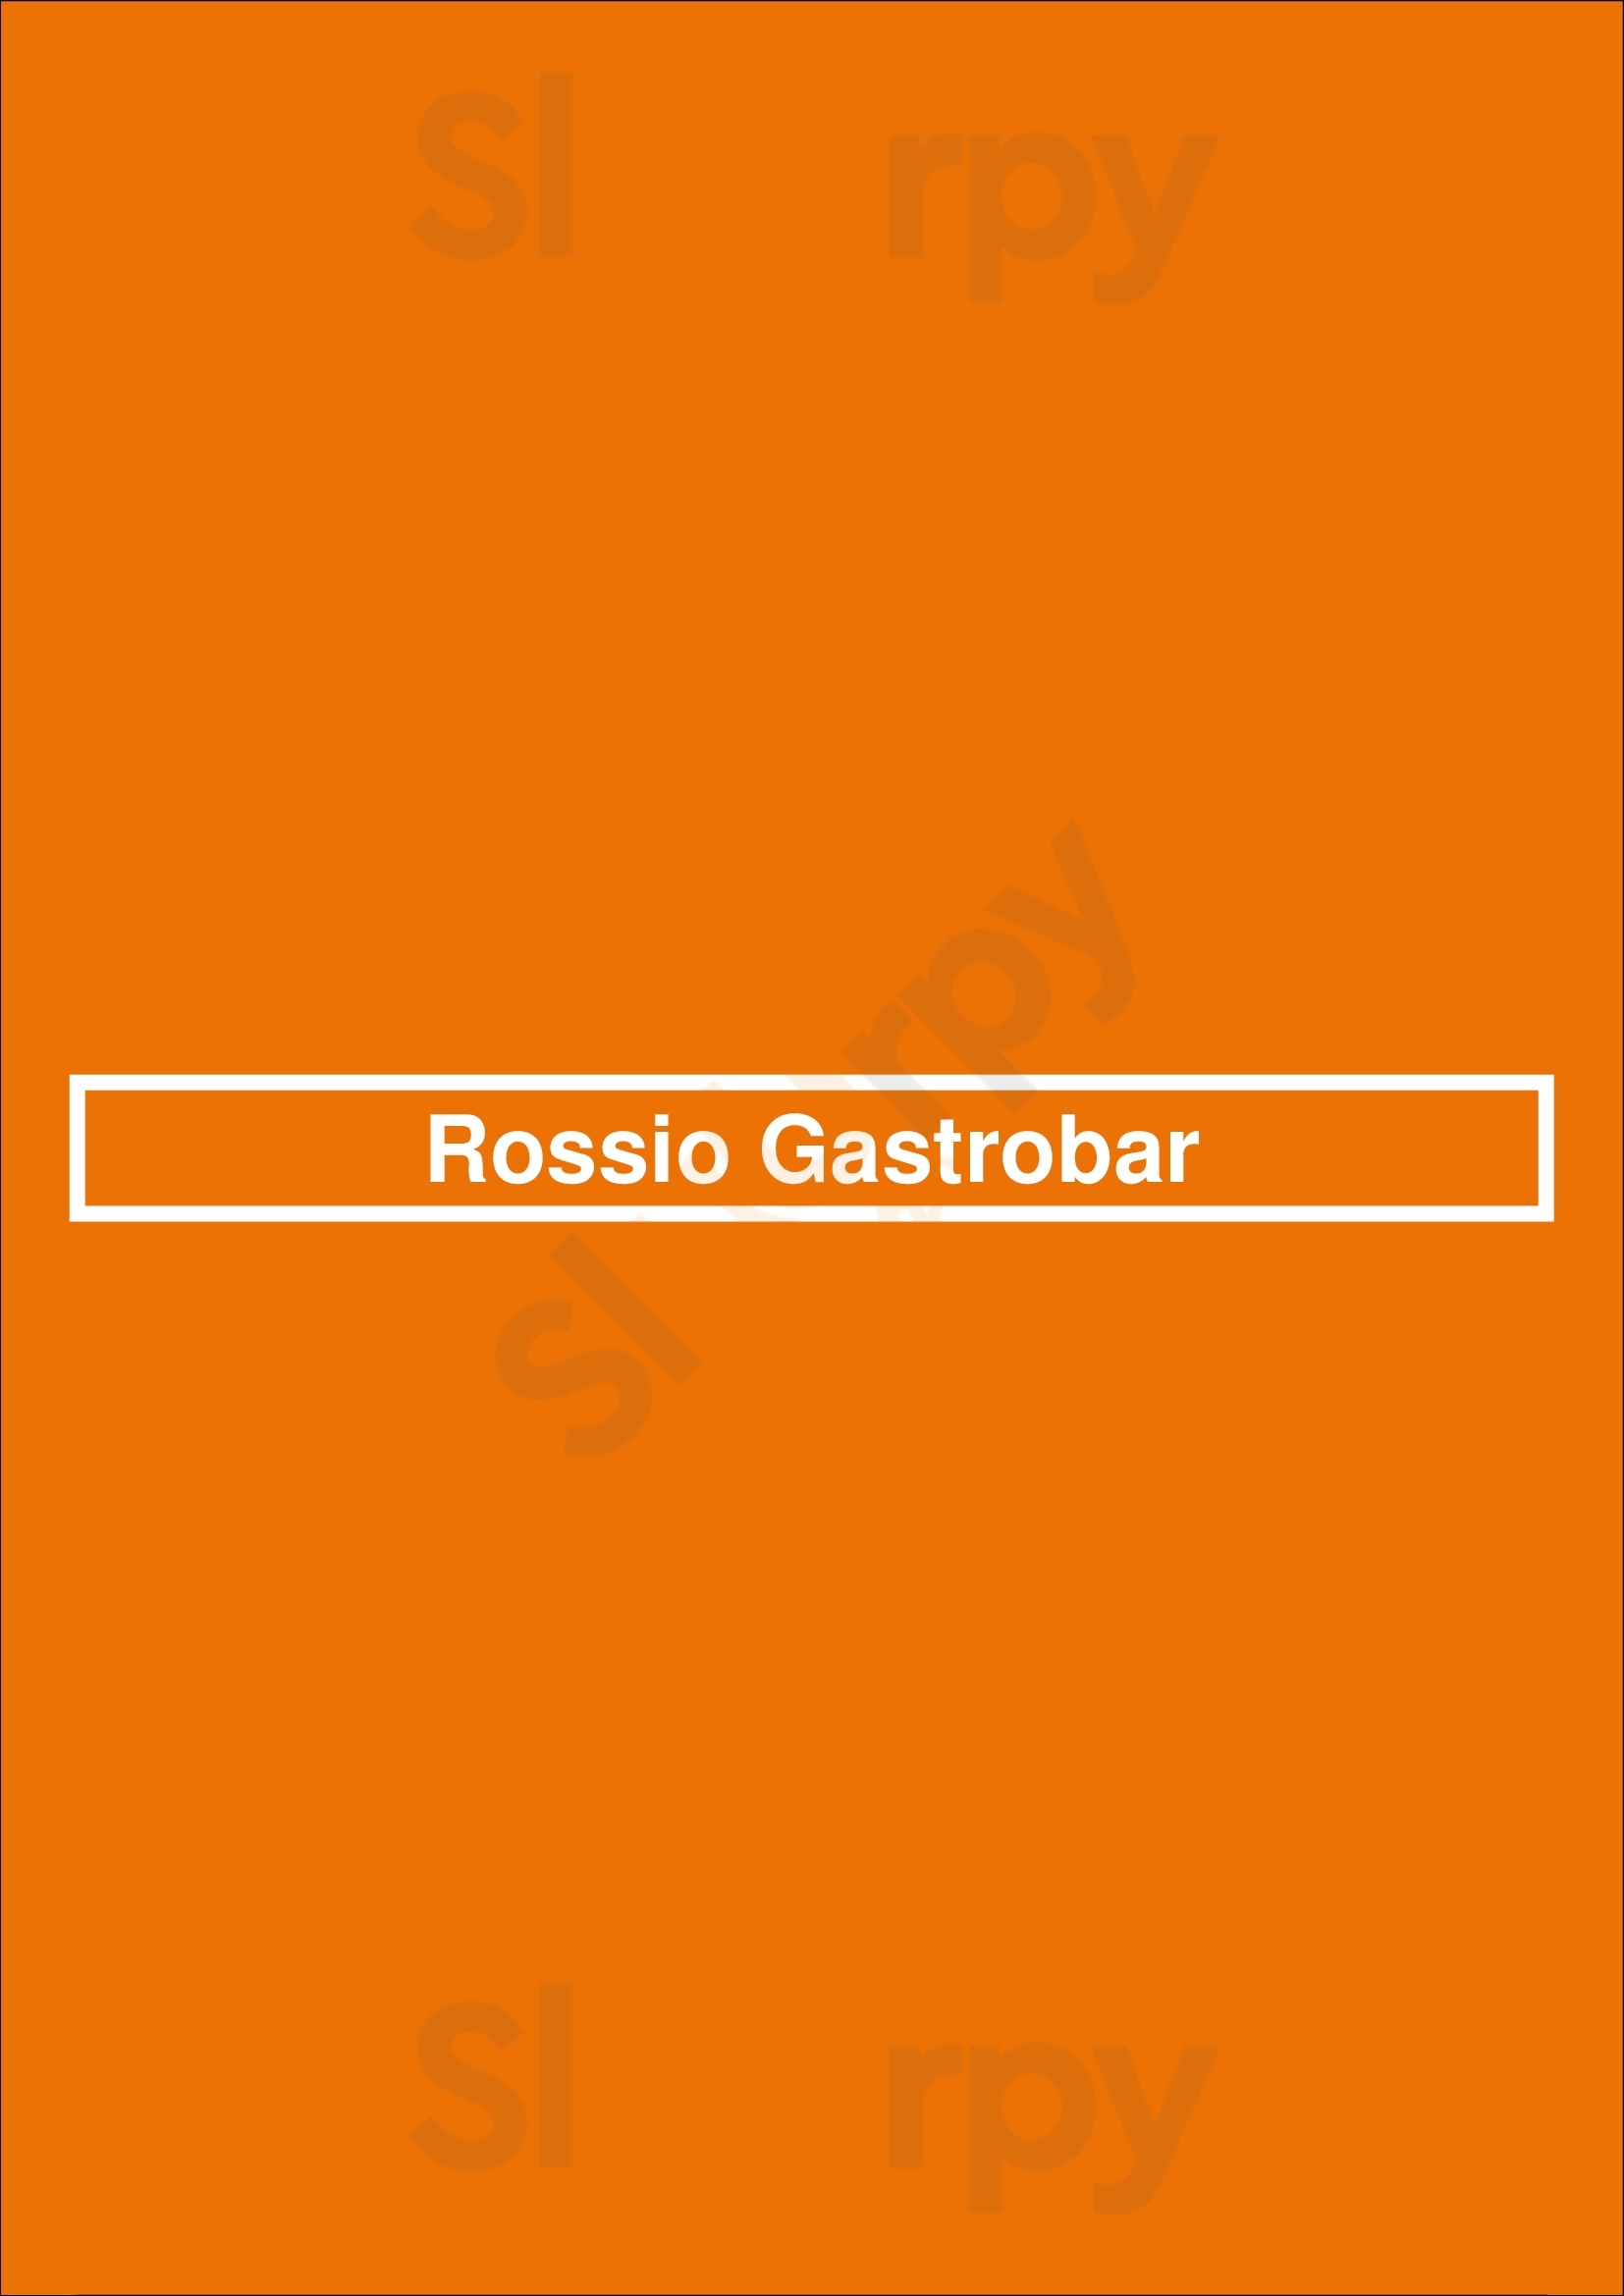 Rossio Gastrobar Lisboa Menu - 1